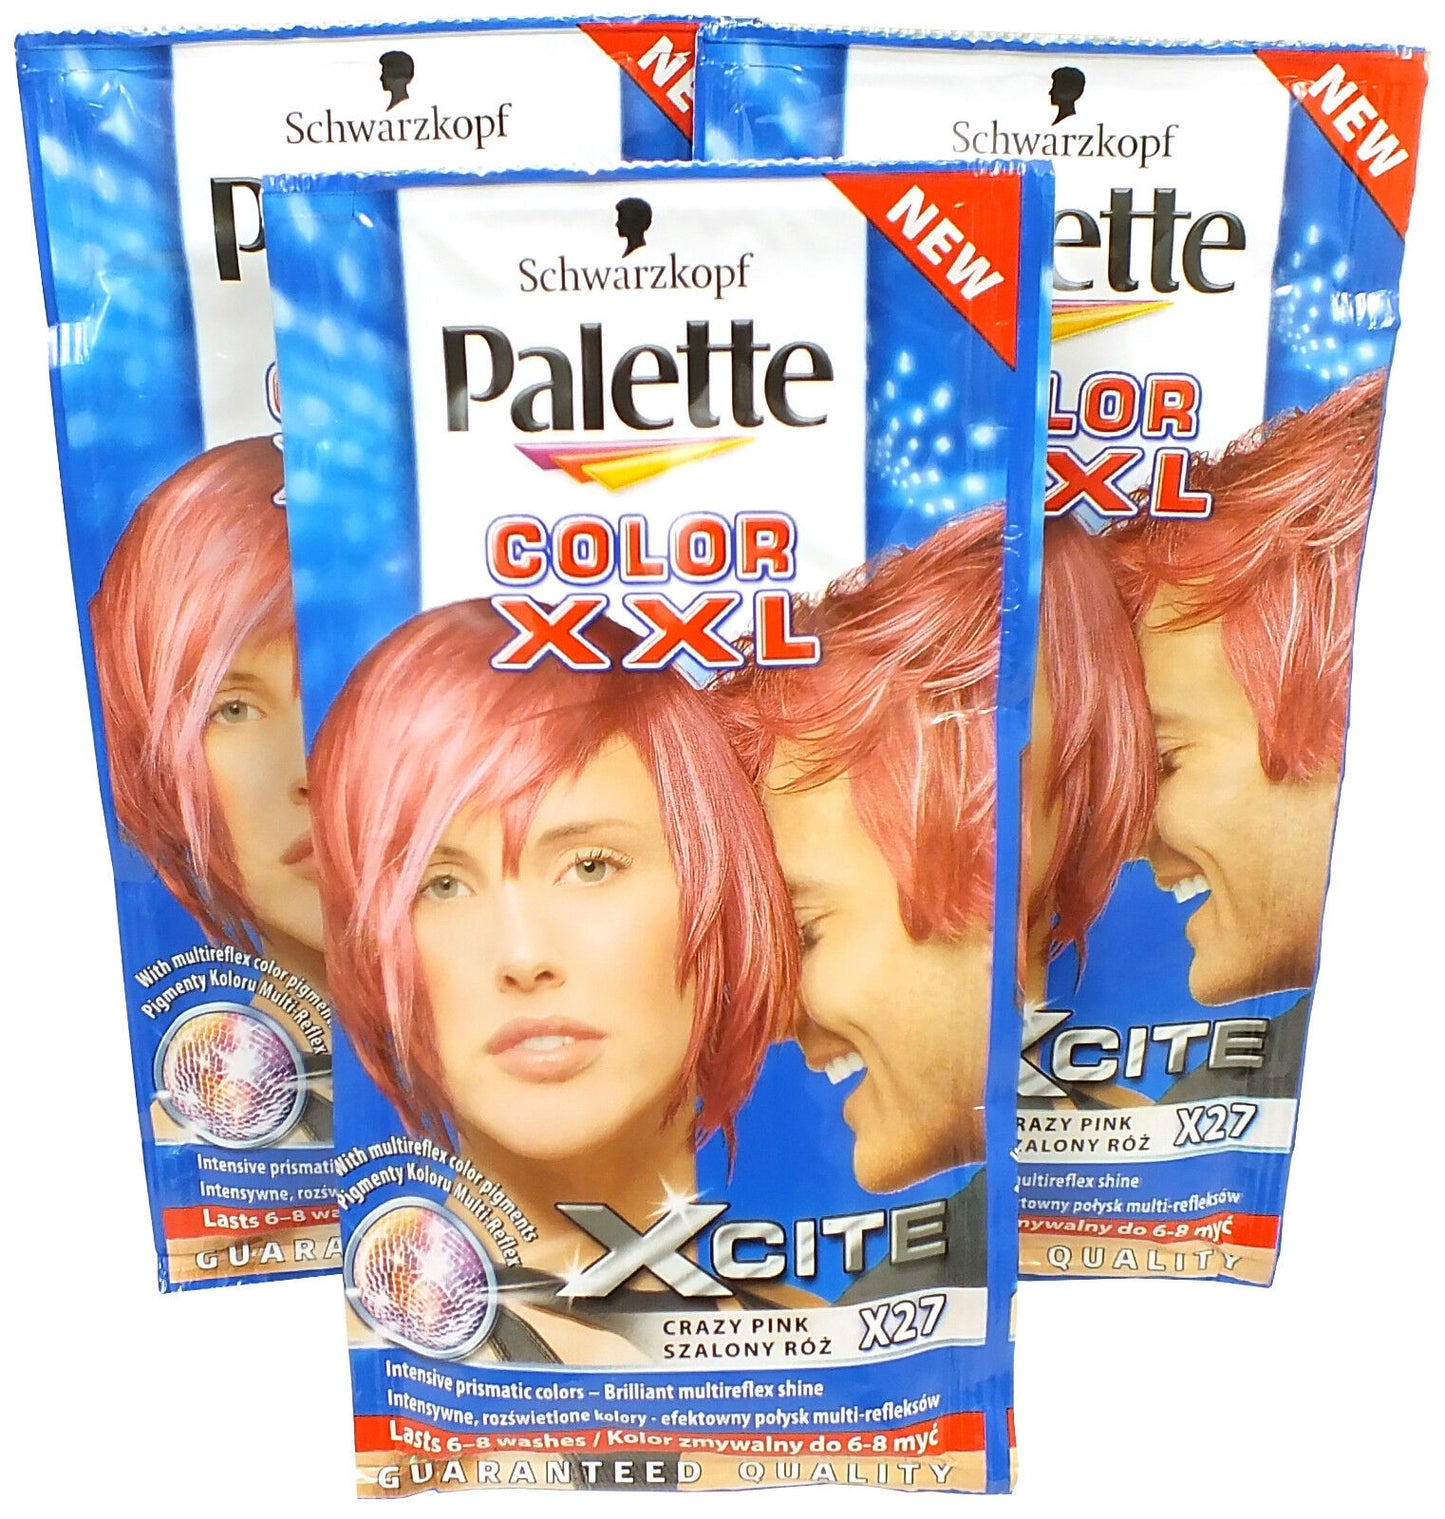 3x Schwarzkopf Palette Color XXL Xcite 25ml - Hair Colour ( Guaranteed Quality )